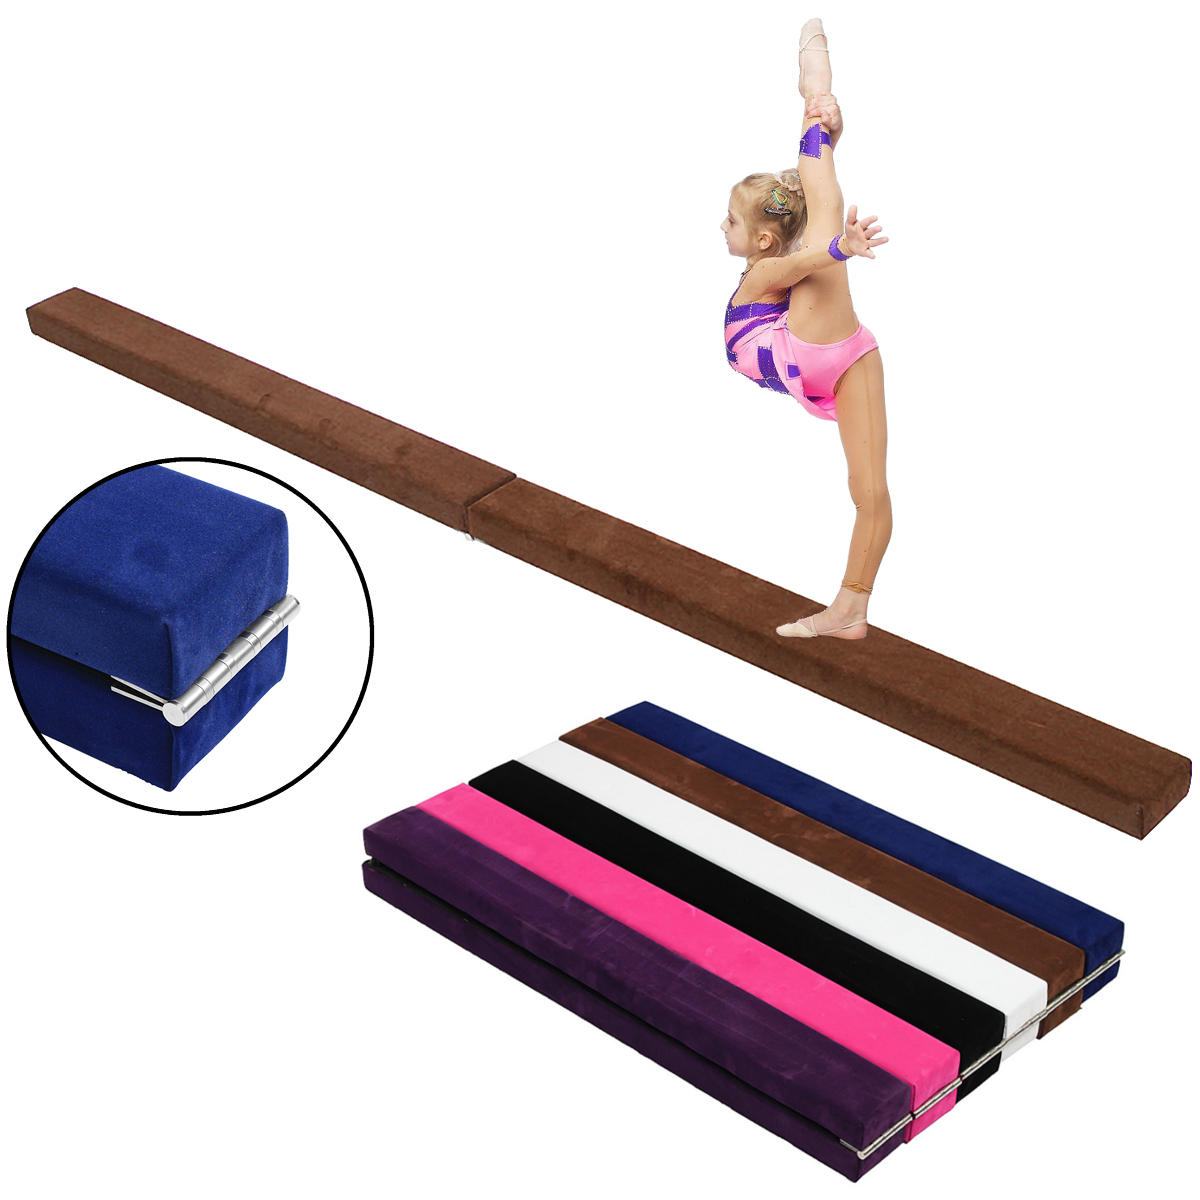 71.7x3.9x2.6inch Airtrack Professional Gymnastics Balance Mat Beam Flannel GYM Practice Training Protective Equipment